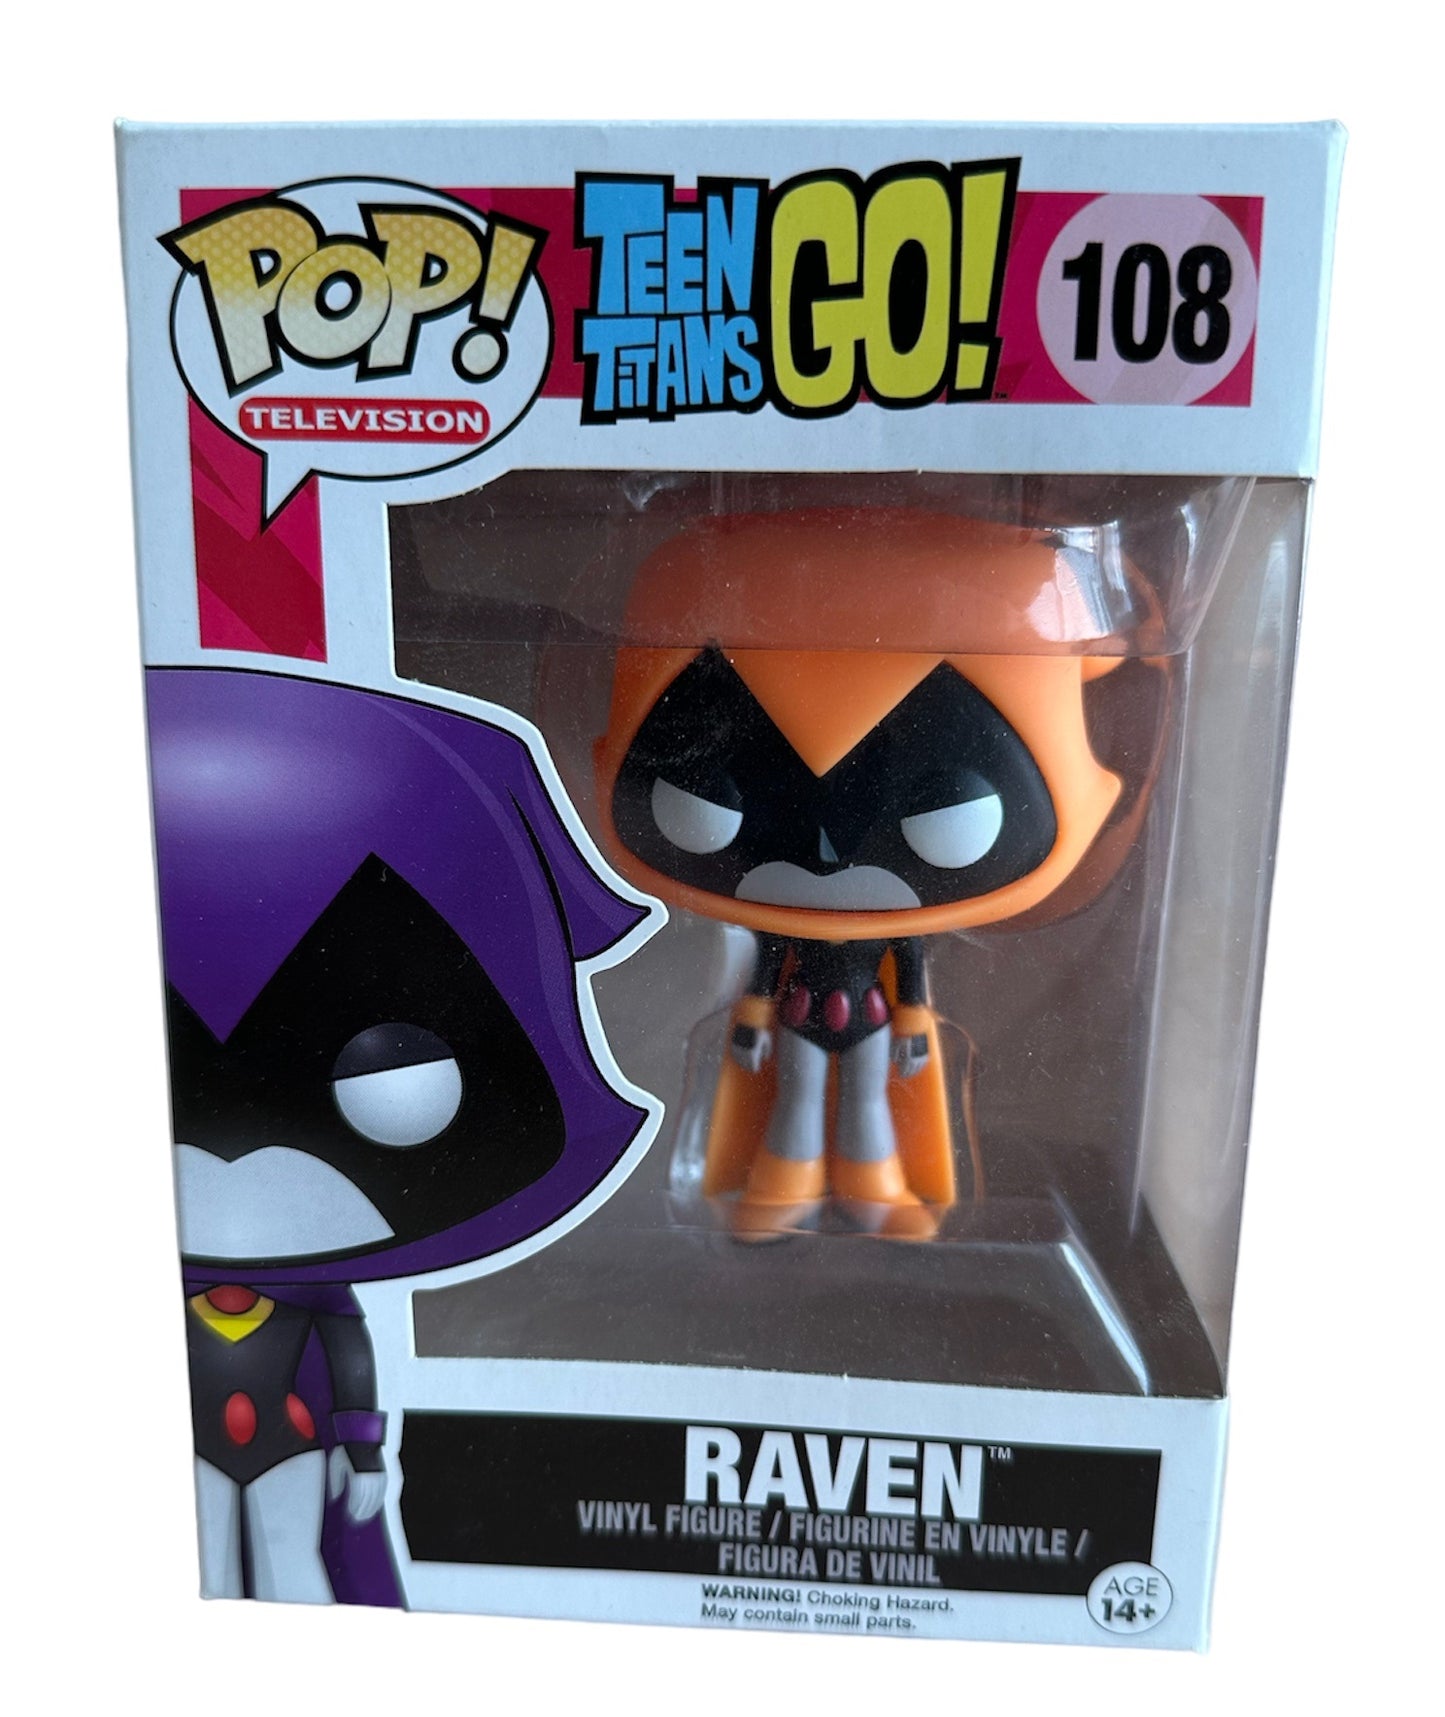 Vintage 2016 DC Comics Teen Titans Go! Pop Television Vinyl Figure - Raven No. 108 - Brand New Shop Stock Room Find